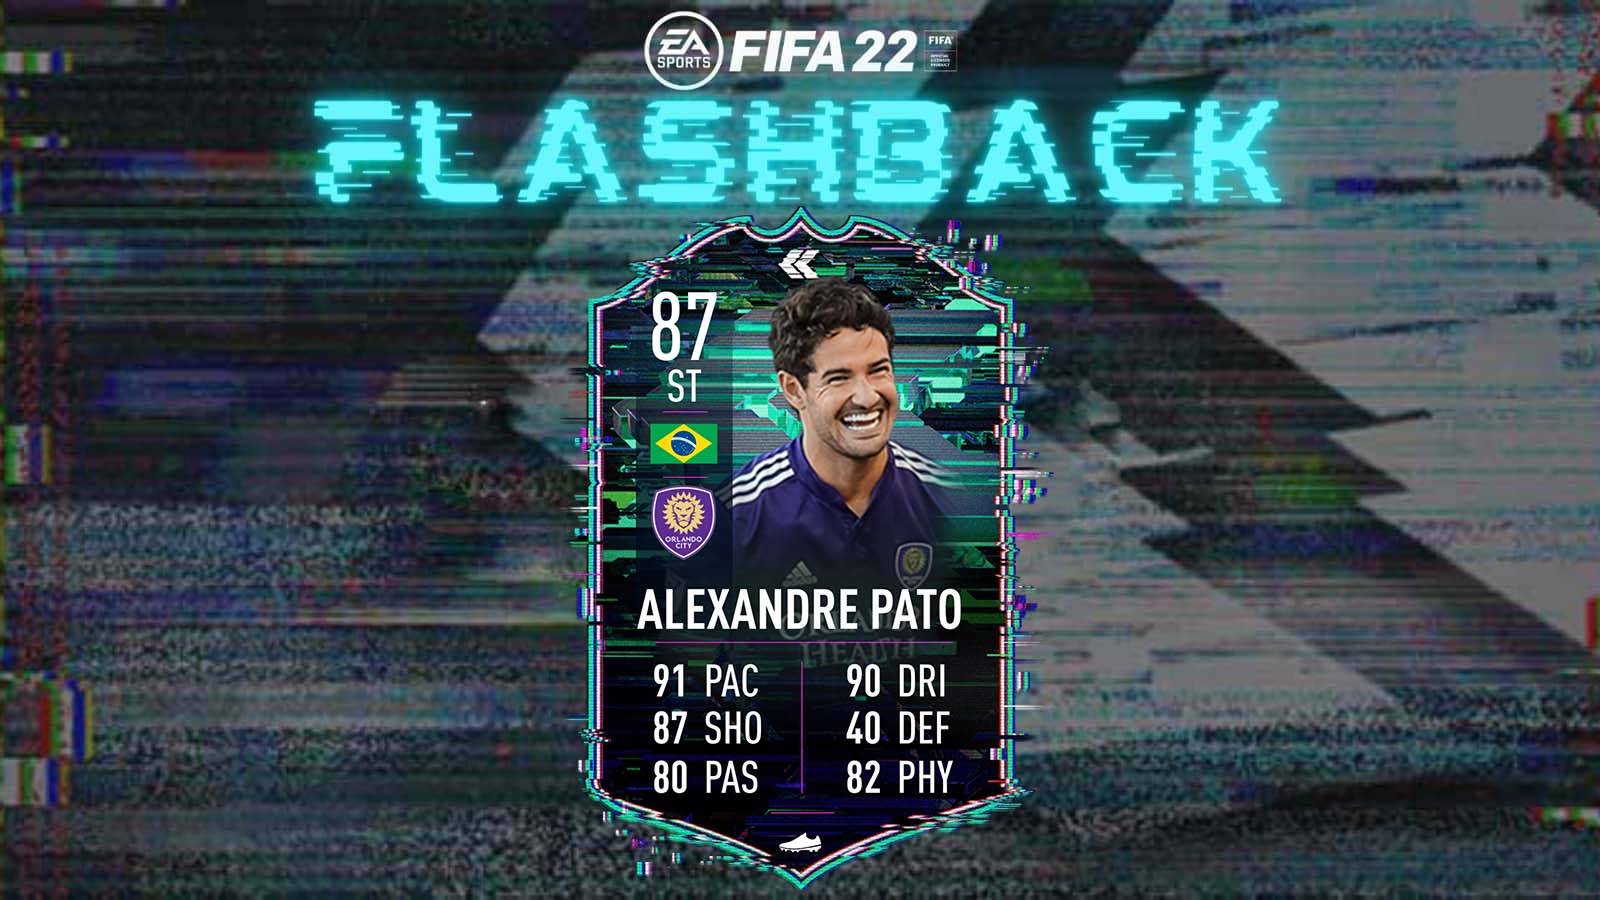 Flashback Pato card with FIFA 22 logo